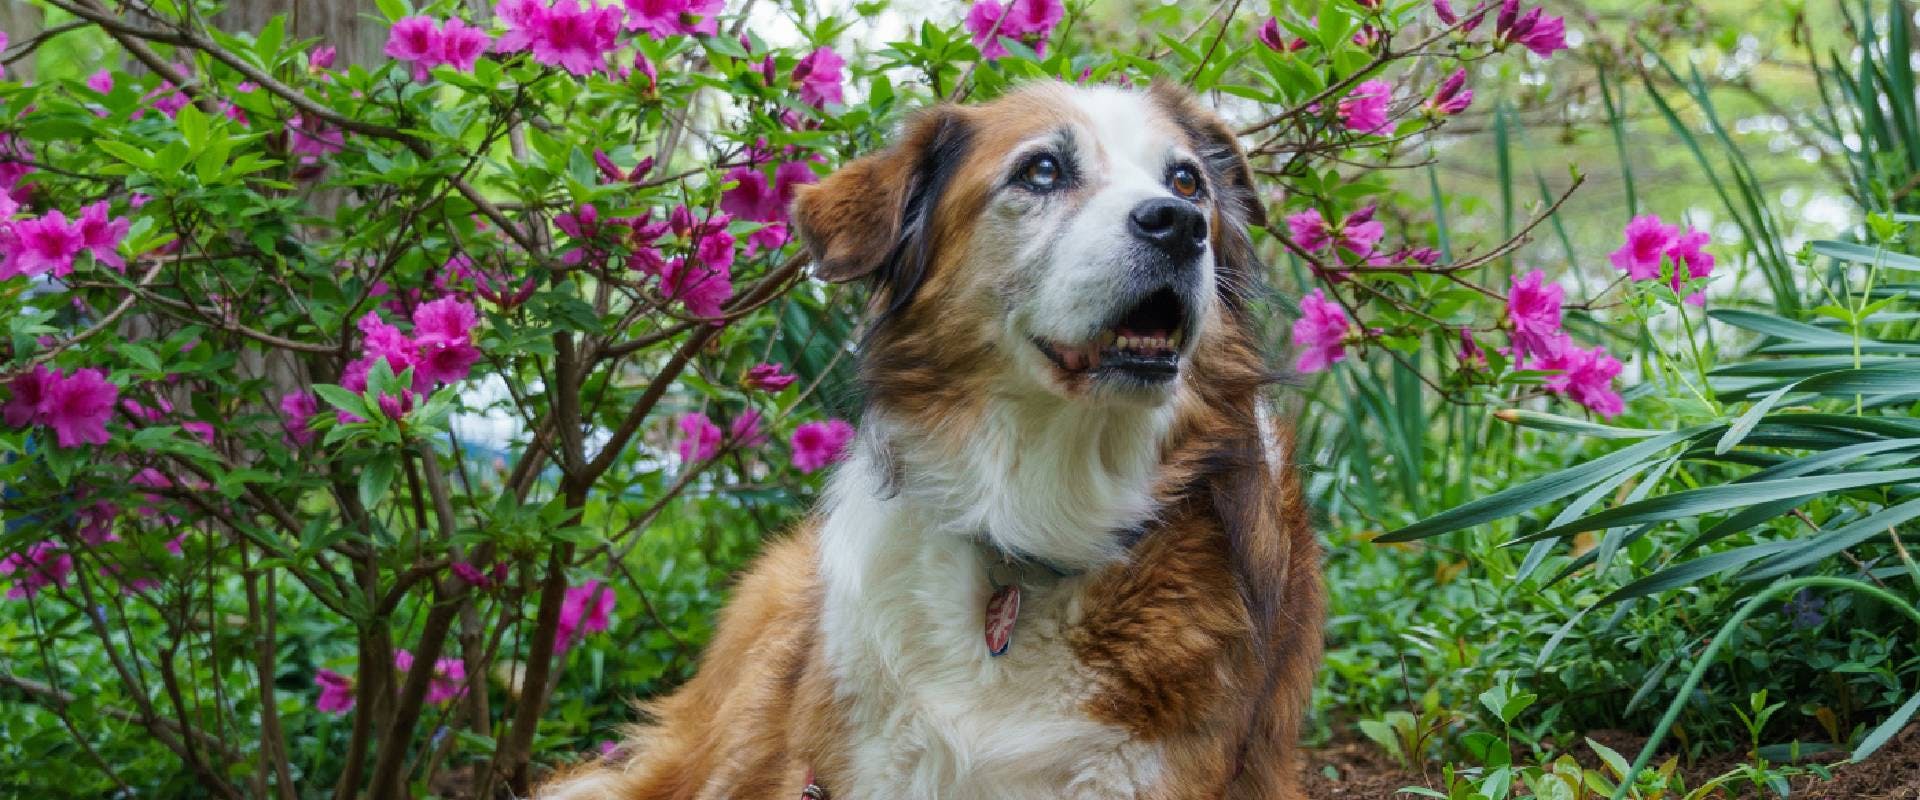 Elderly dog sitting in front of an azalea shrub